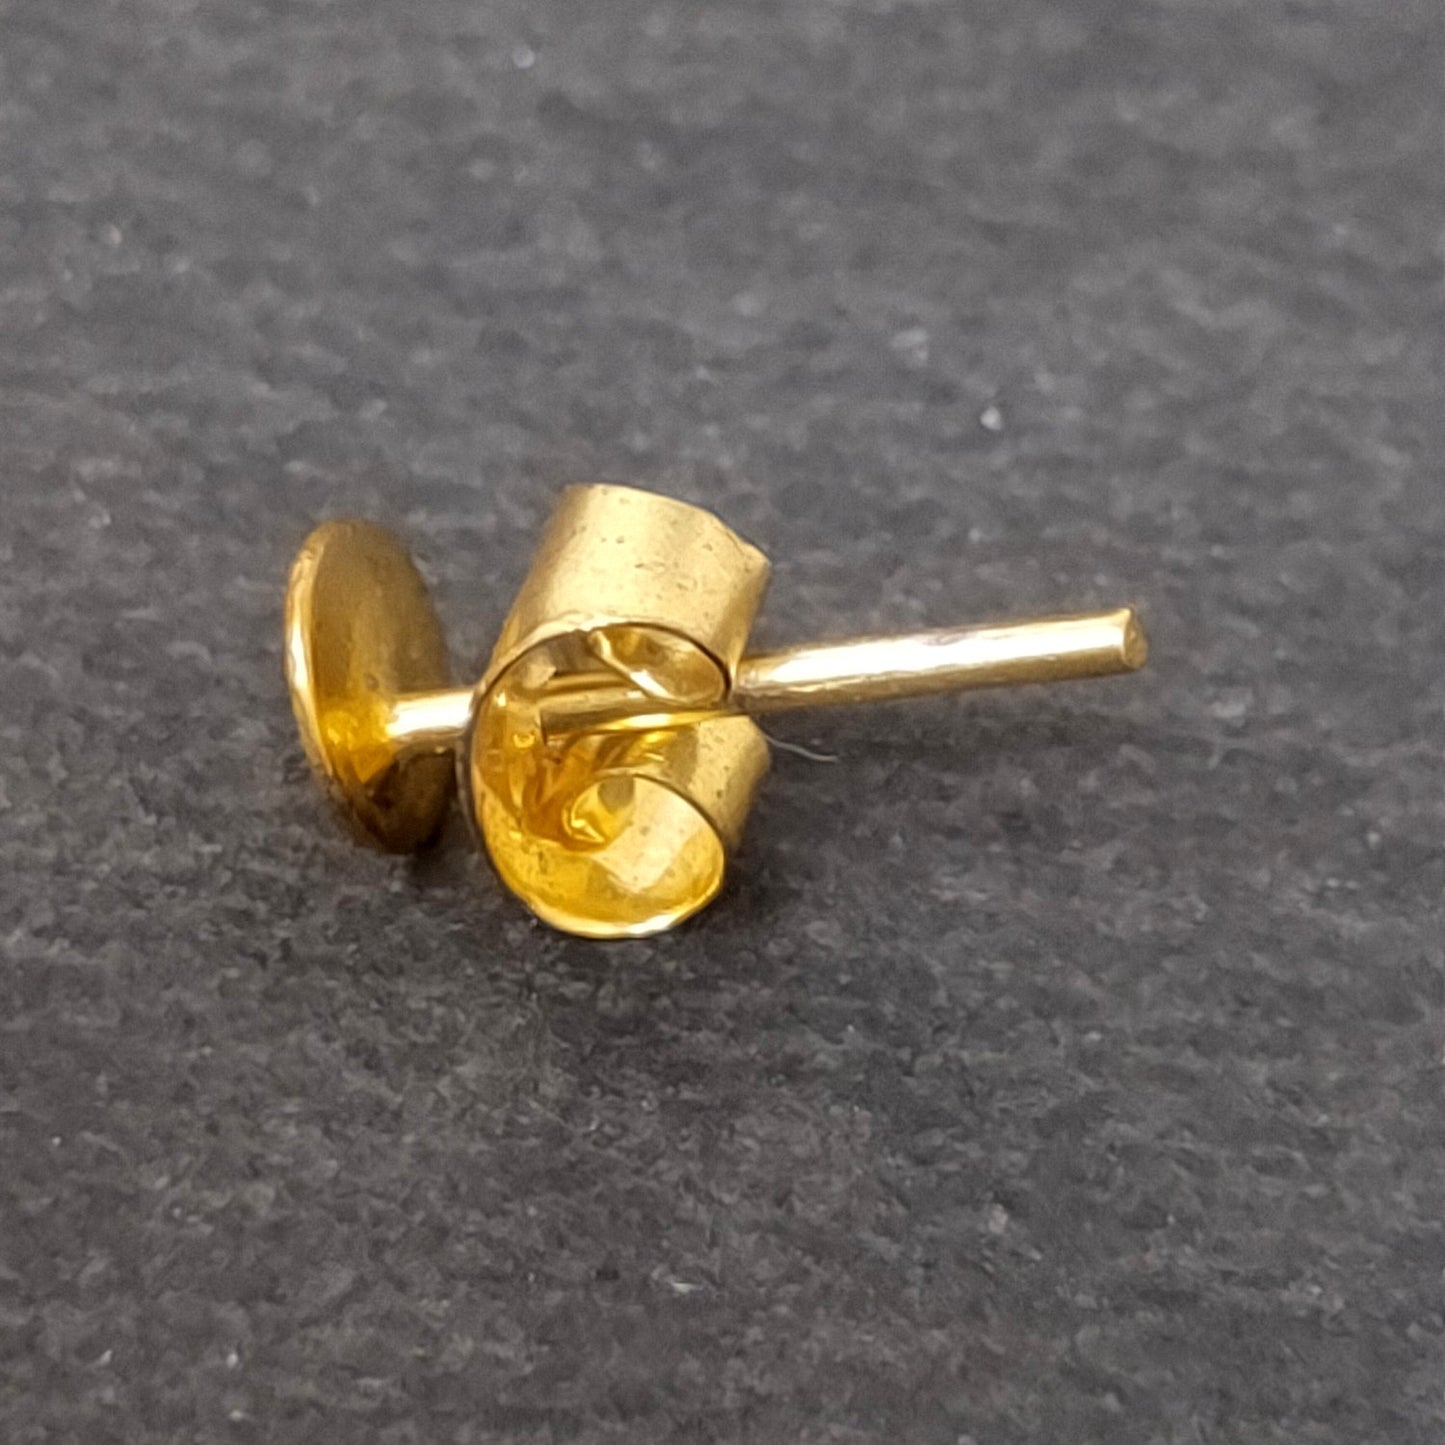 12 mm Golden Stud Head Pins with Brass Push lock Earring Back for Making Earrings (25 Pcs) - 96-28